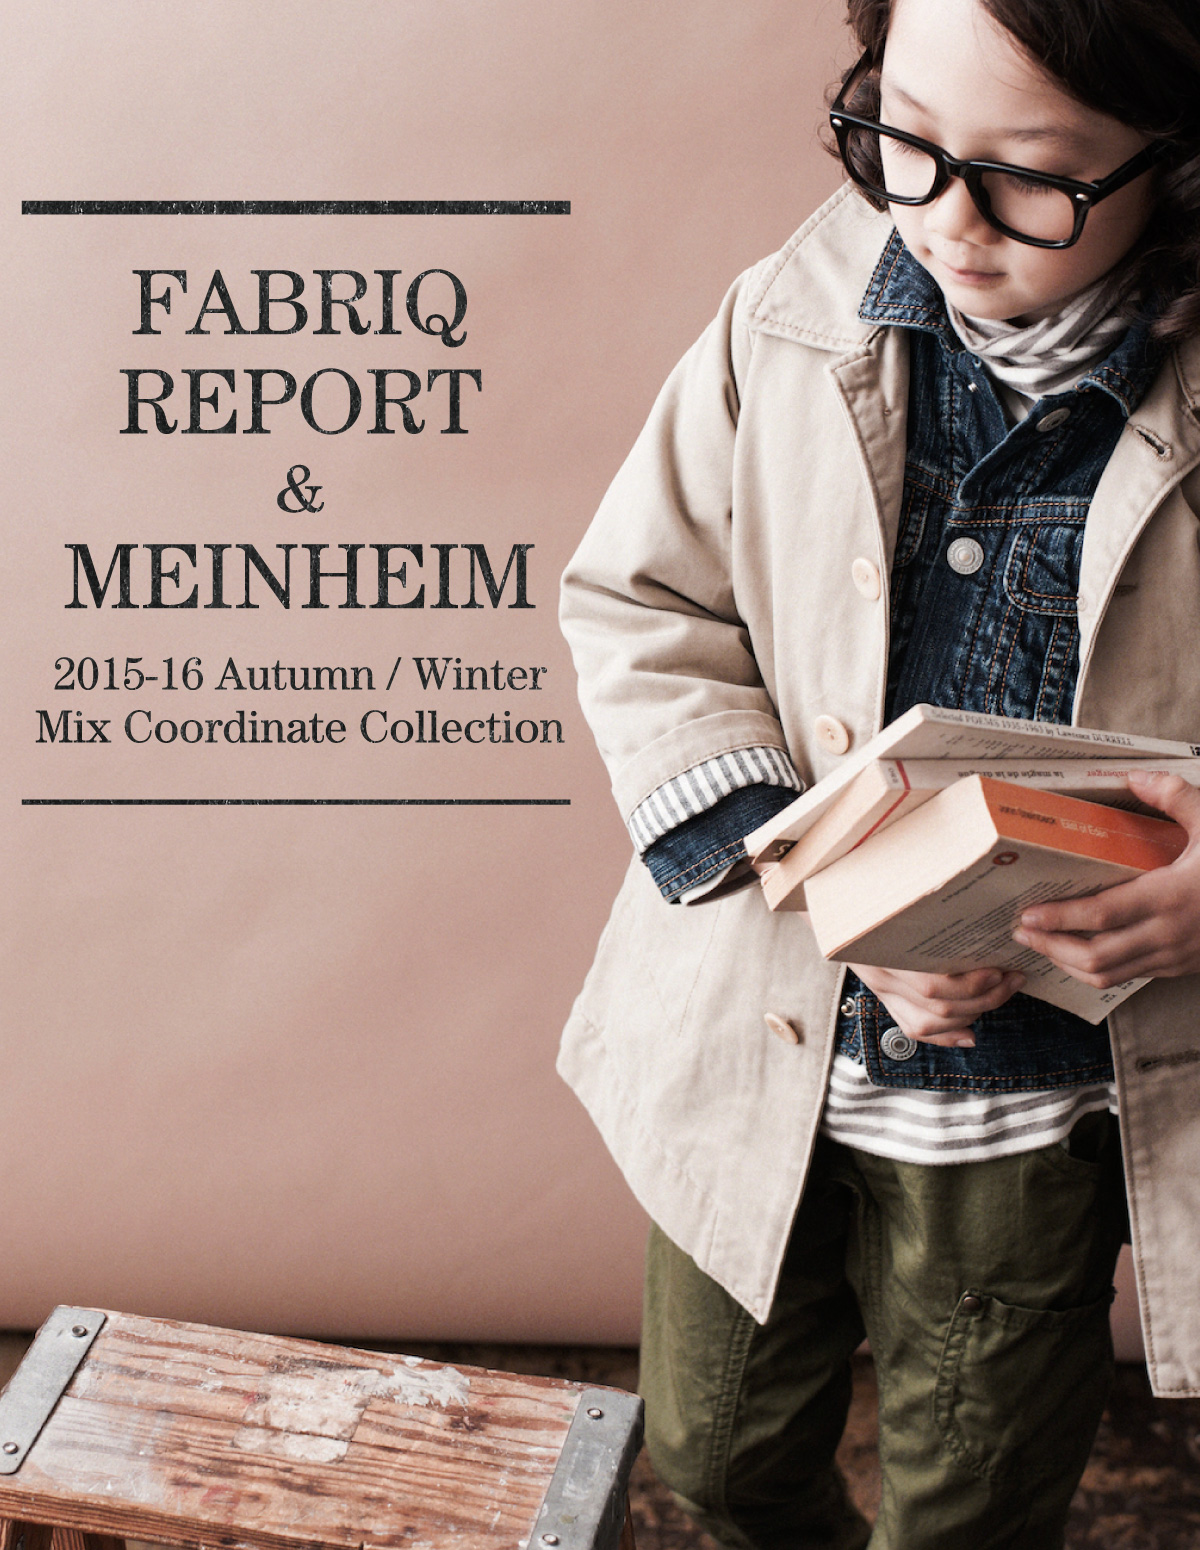 FABRIQ REPORT & MEINHEIM 2015-16 Autumn / Winter Collection